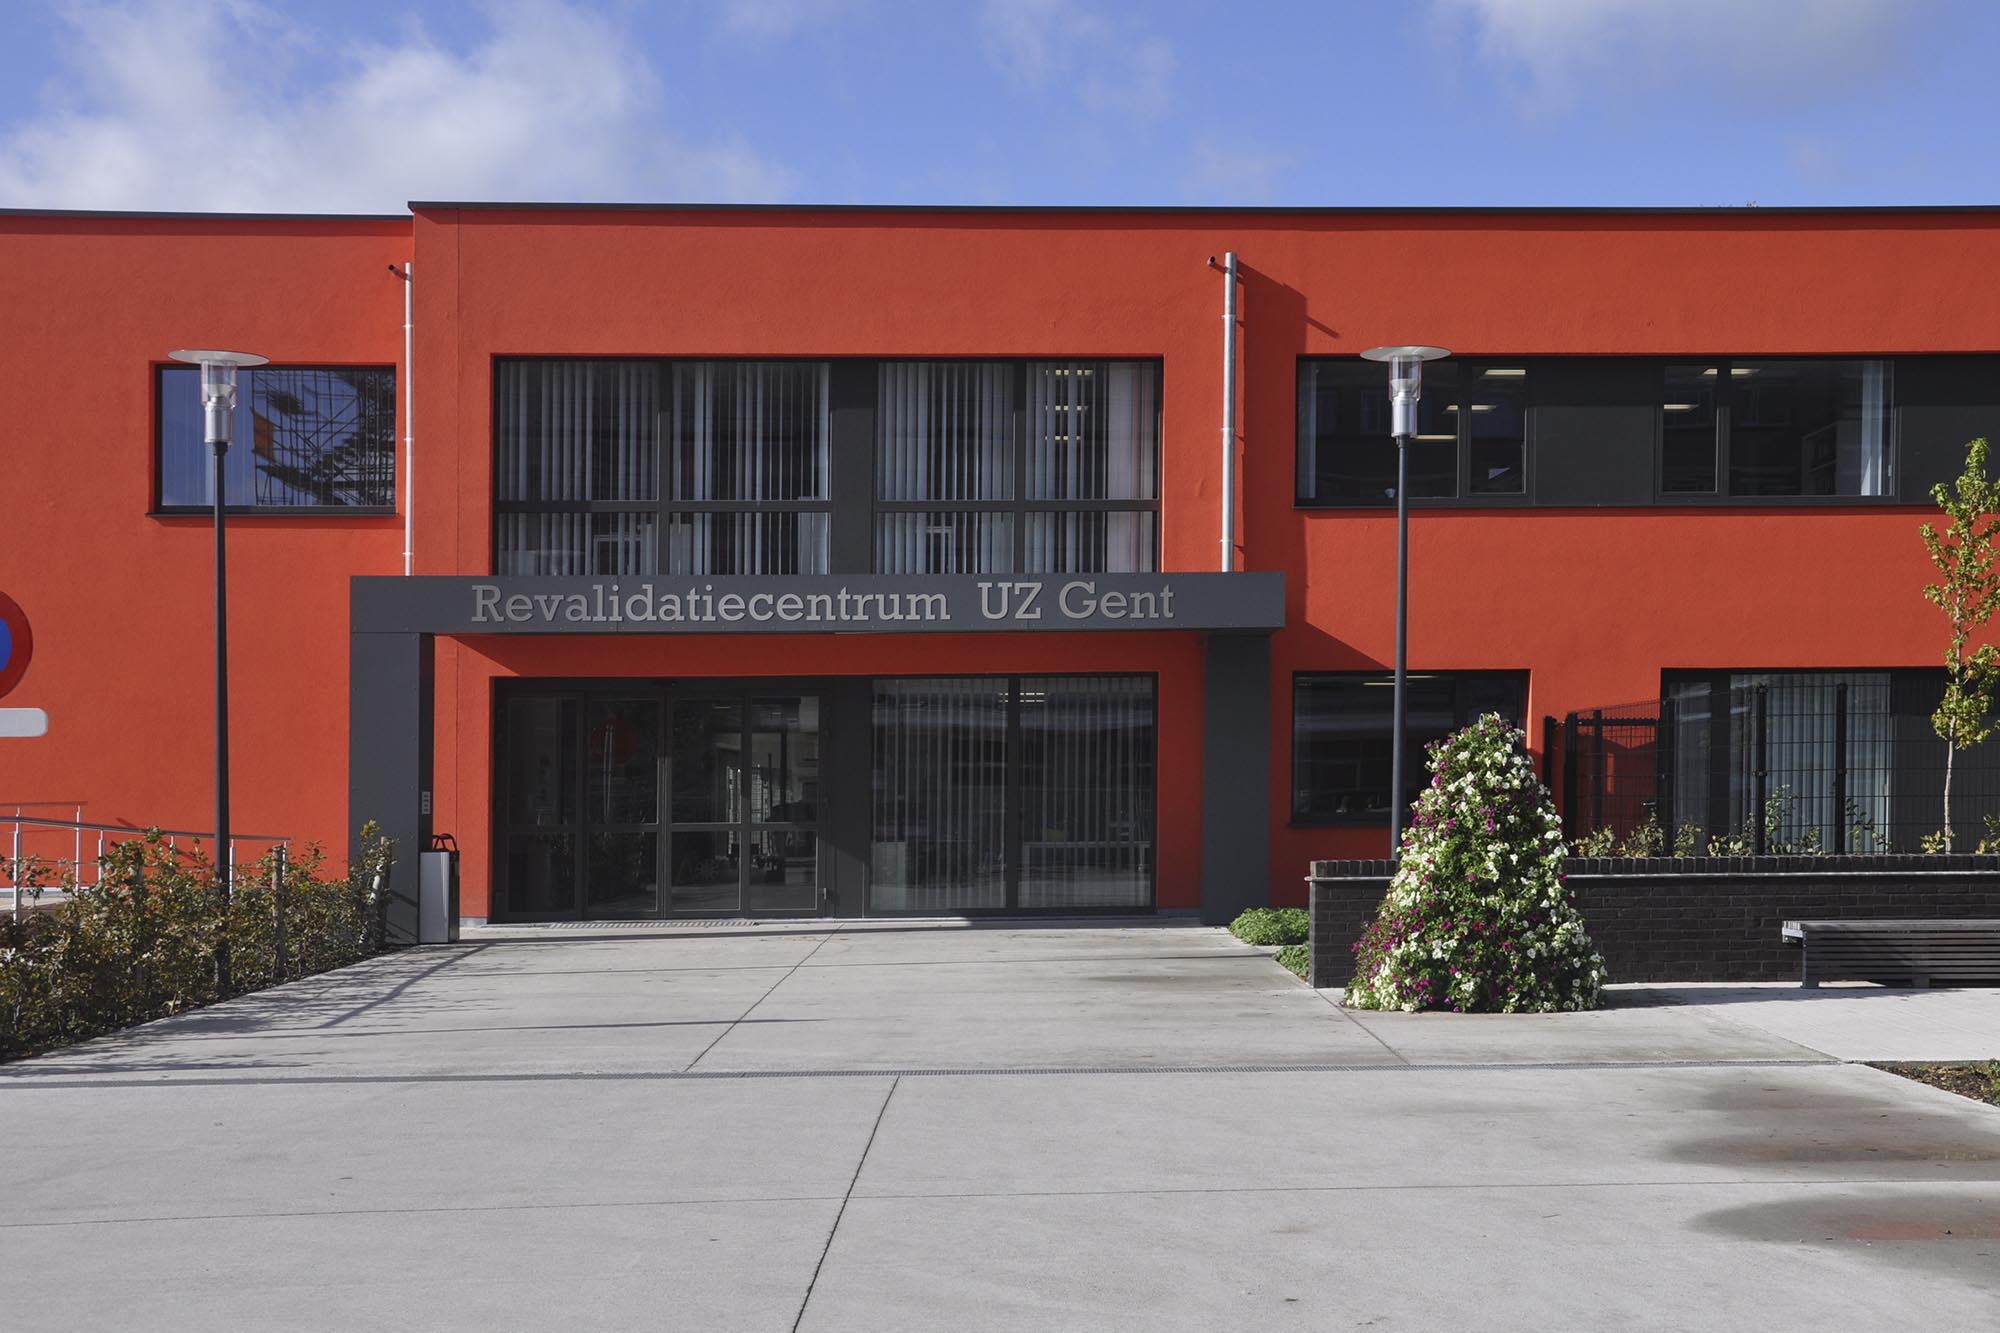 Entrance to the Revalidatiecentrum UZ Gent building